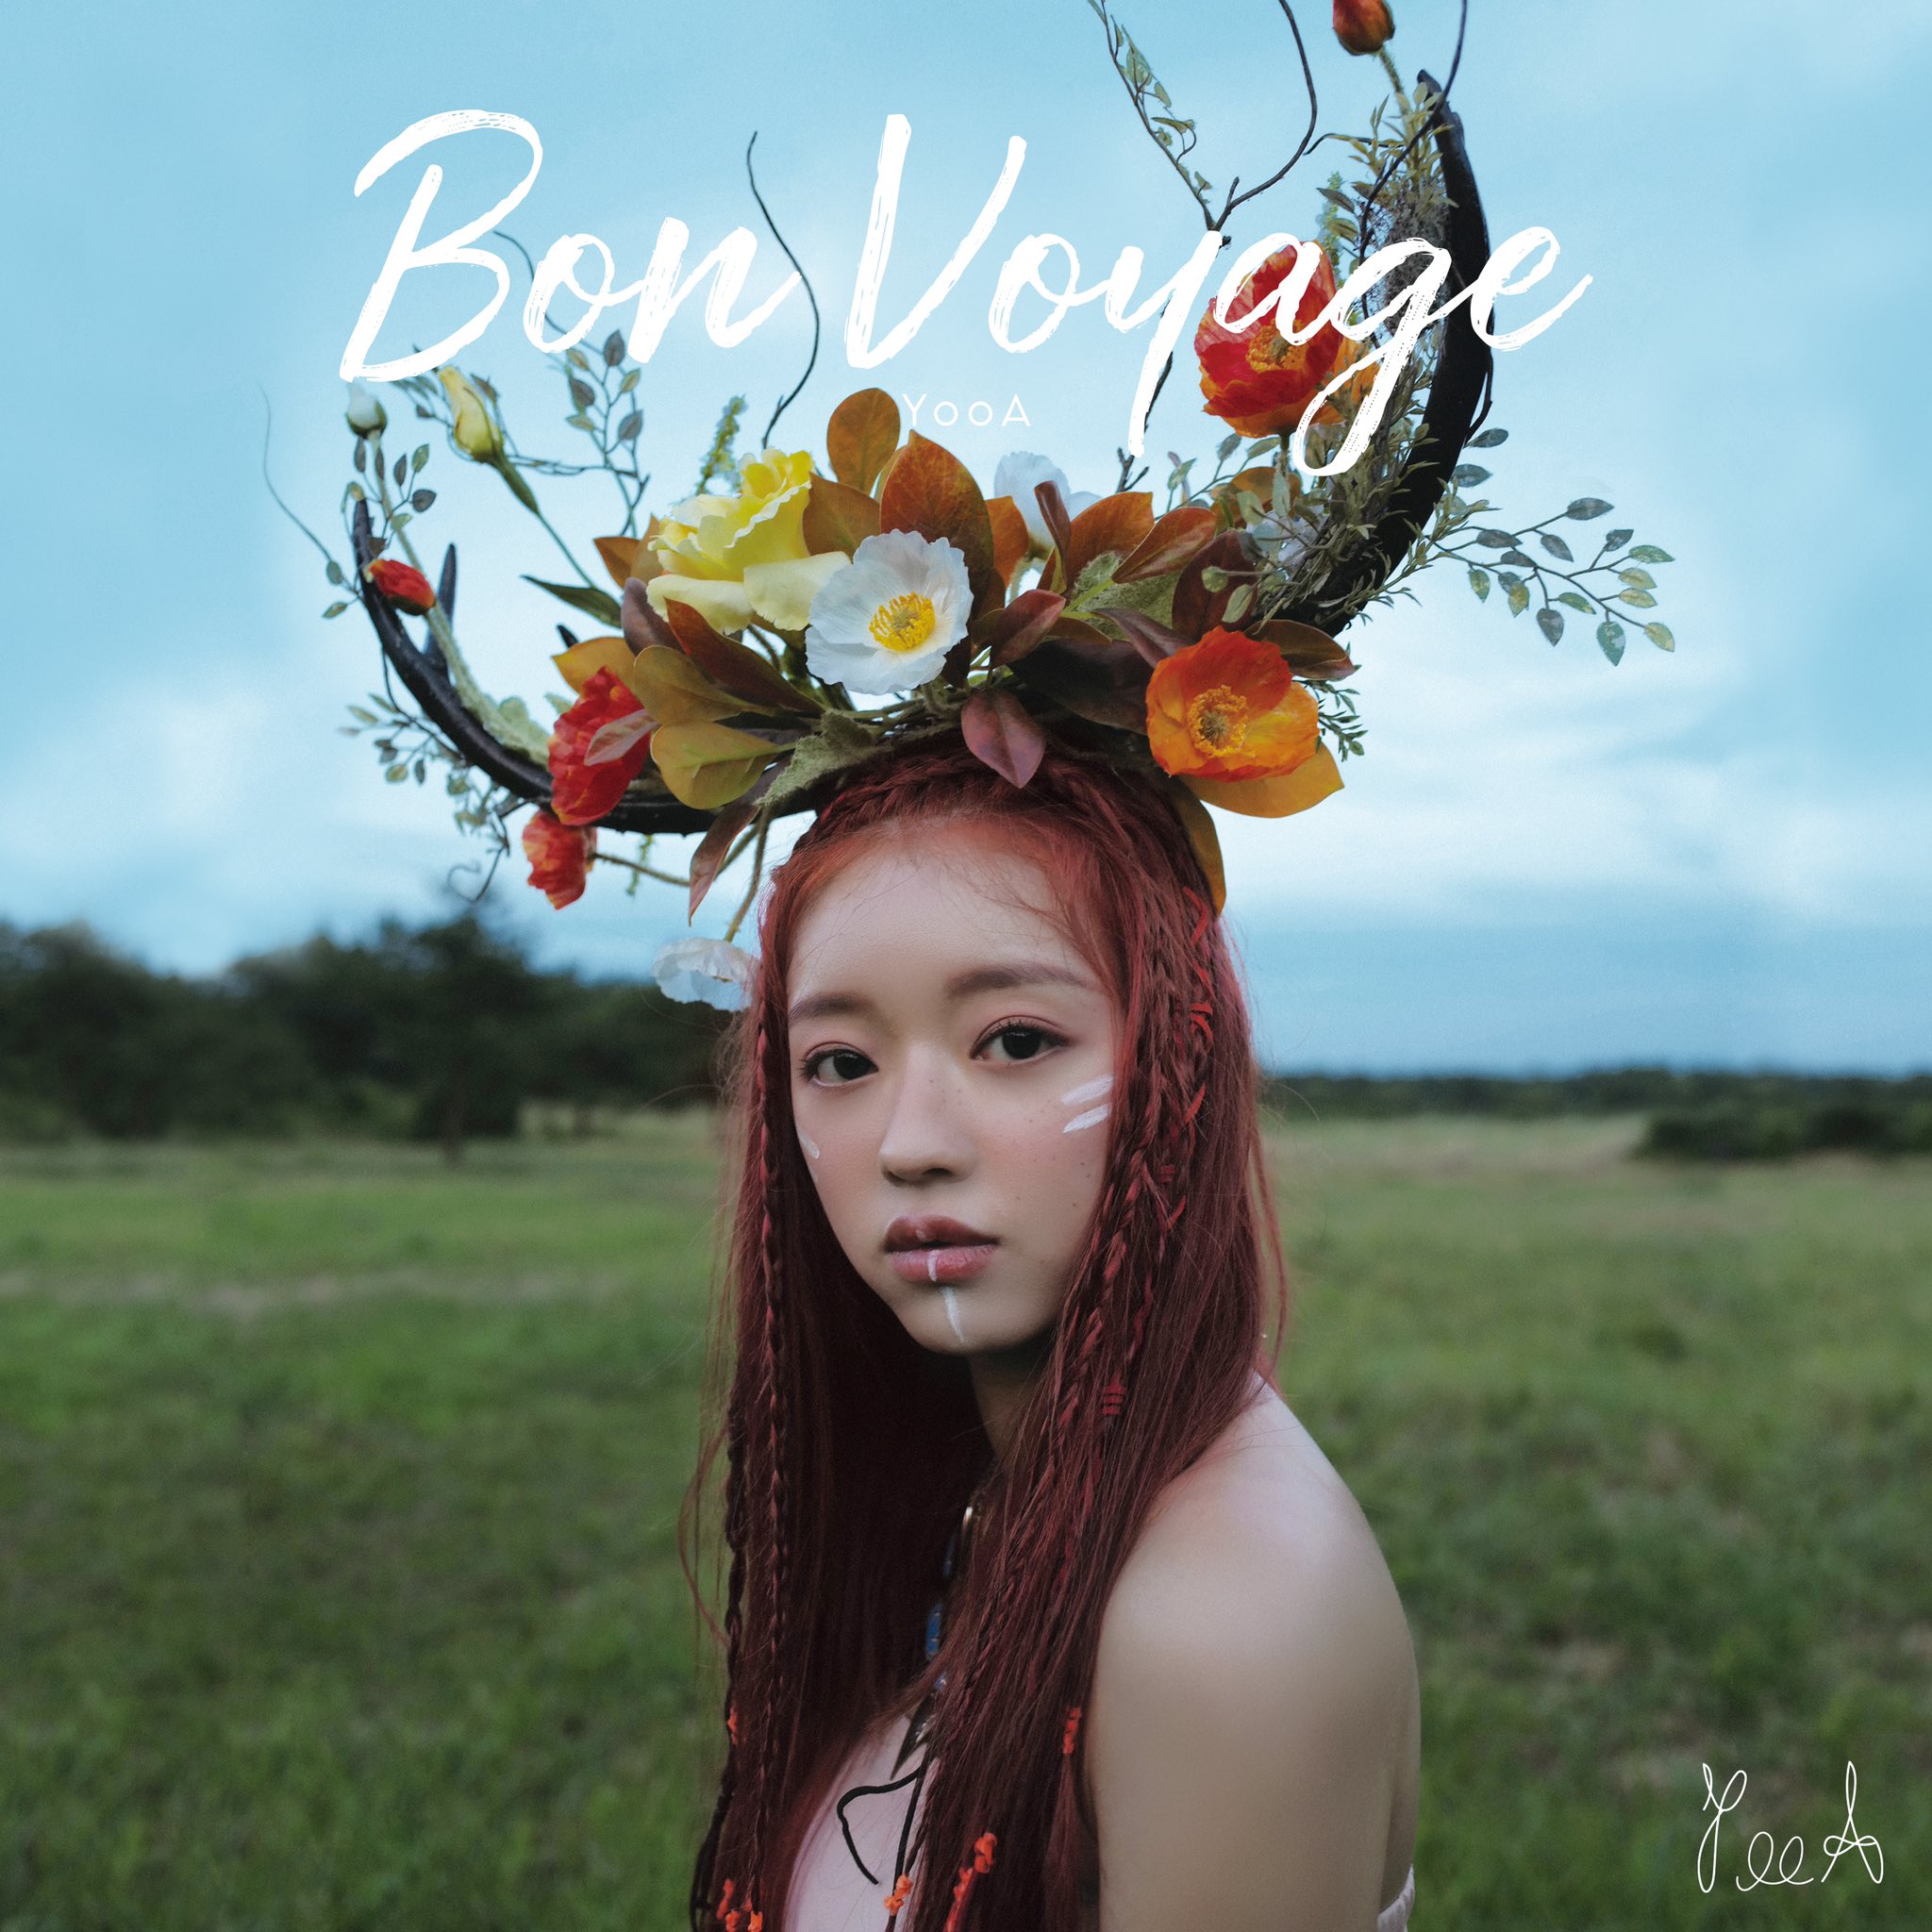 Oh My Girl Yooa - Bon Voyage (Solo Debut) Teaser Photos (HD/HQ) - K-Pop  Database / dbkpop.com